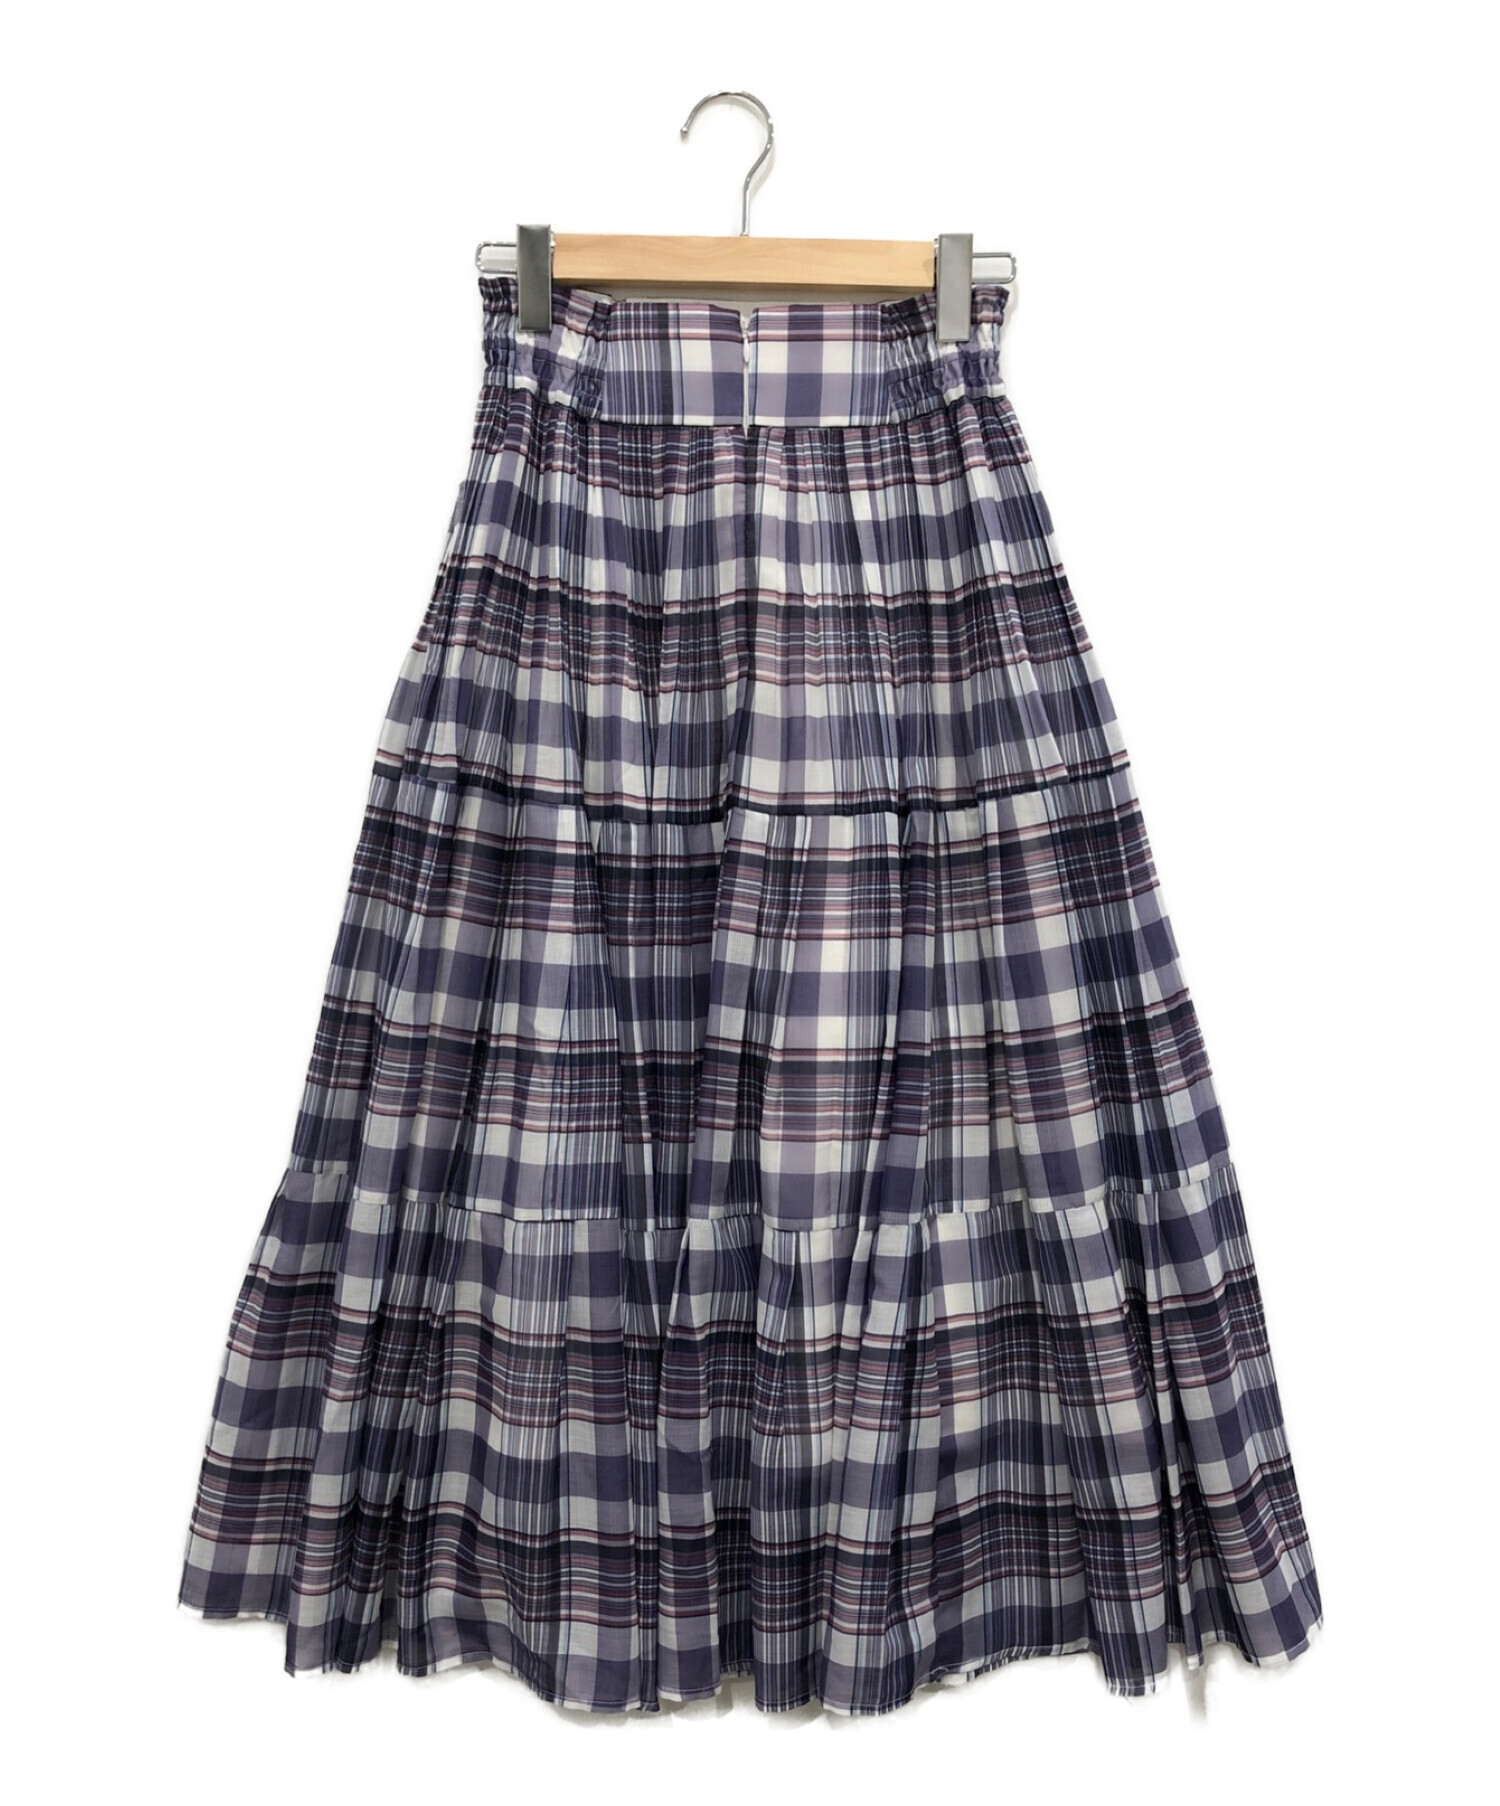 Apuwehser-riche スカート size0 - ロングスカート